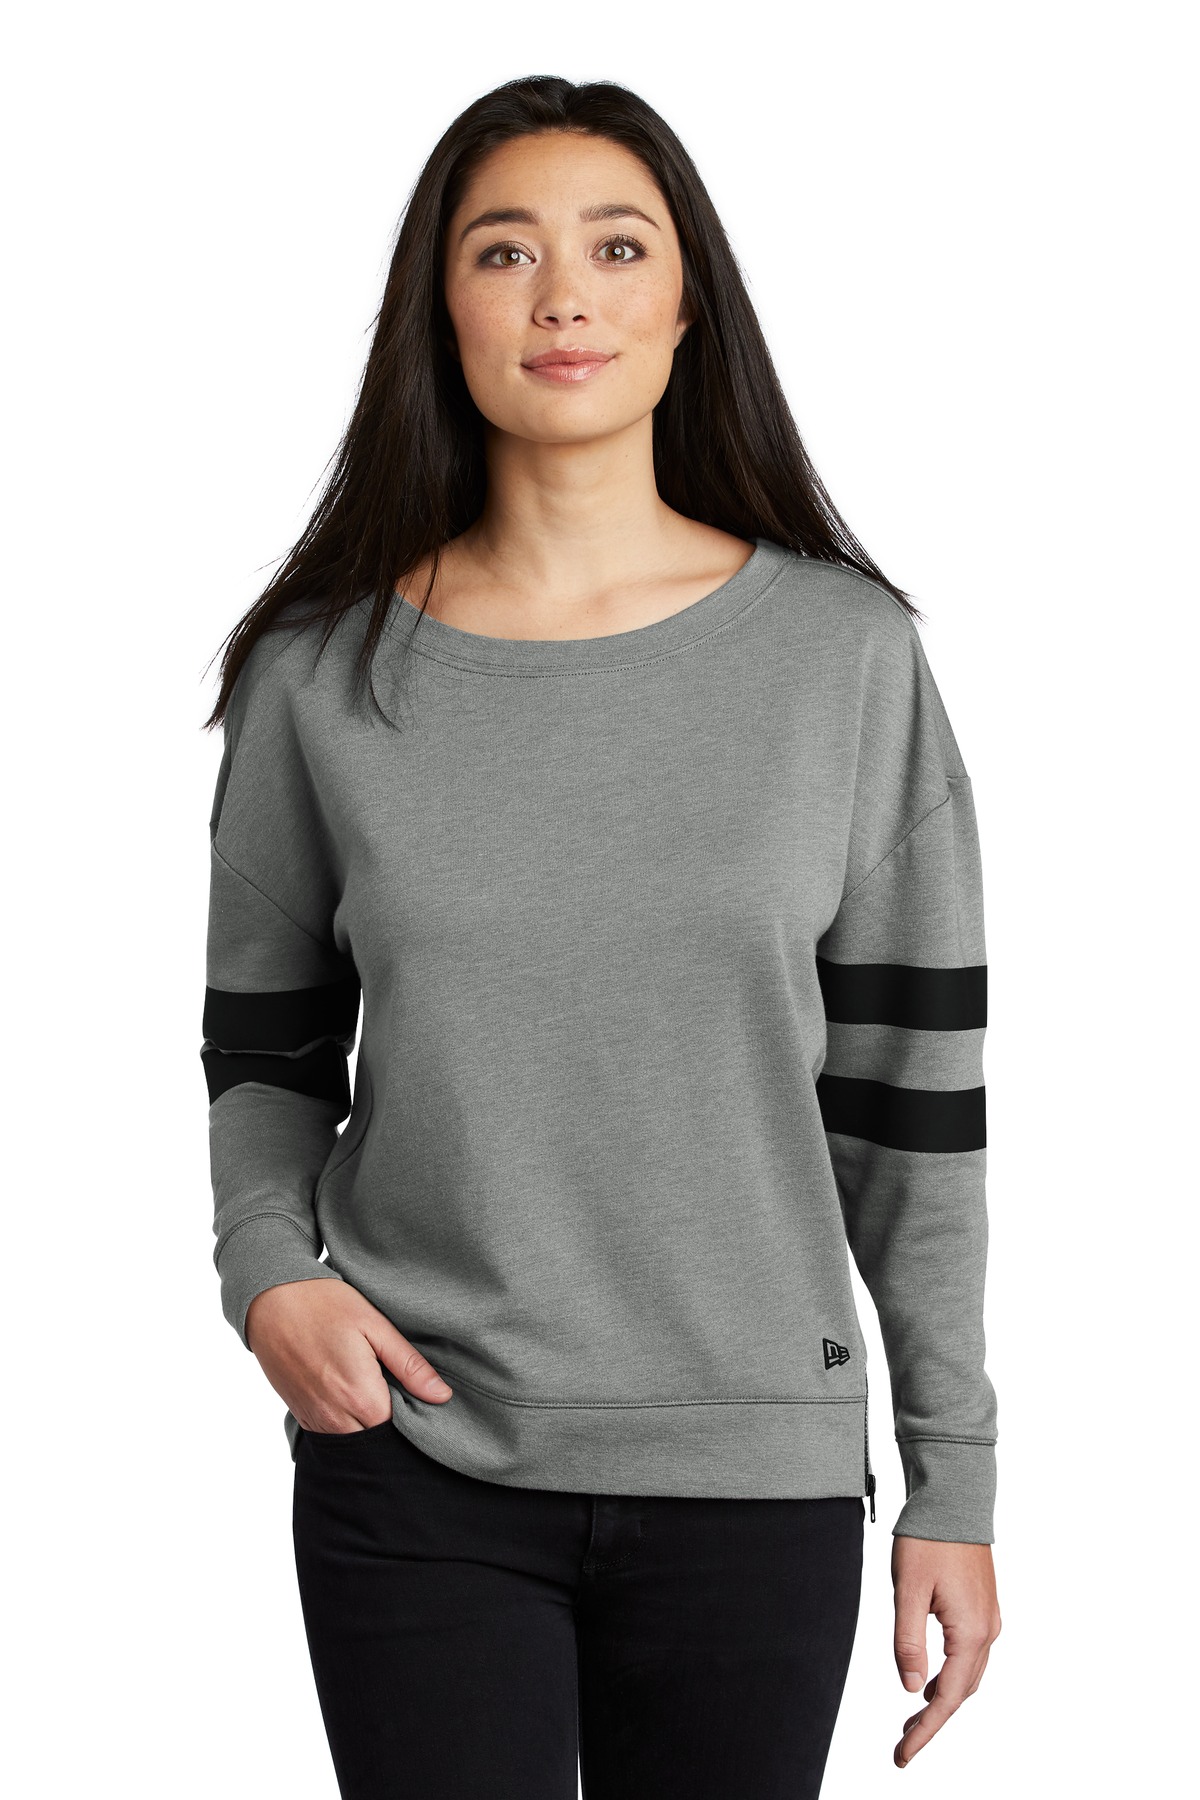 New Era Ladies Sweatshirts & Fleece for Hospitality ® Ladies Tri-Blend Fleece Varsity Crew-New Era